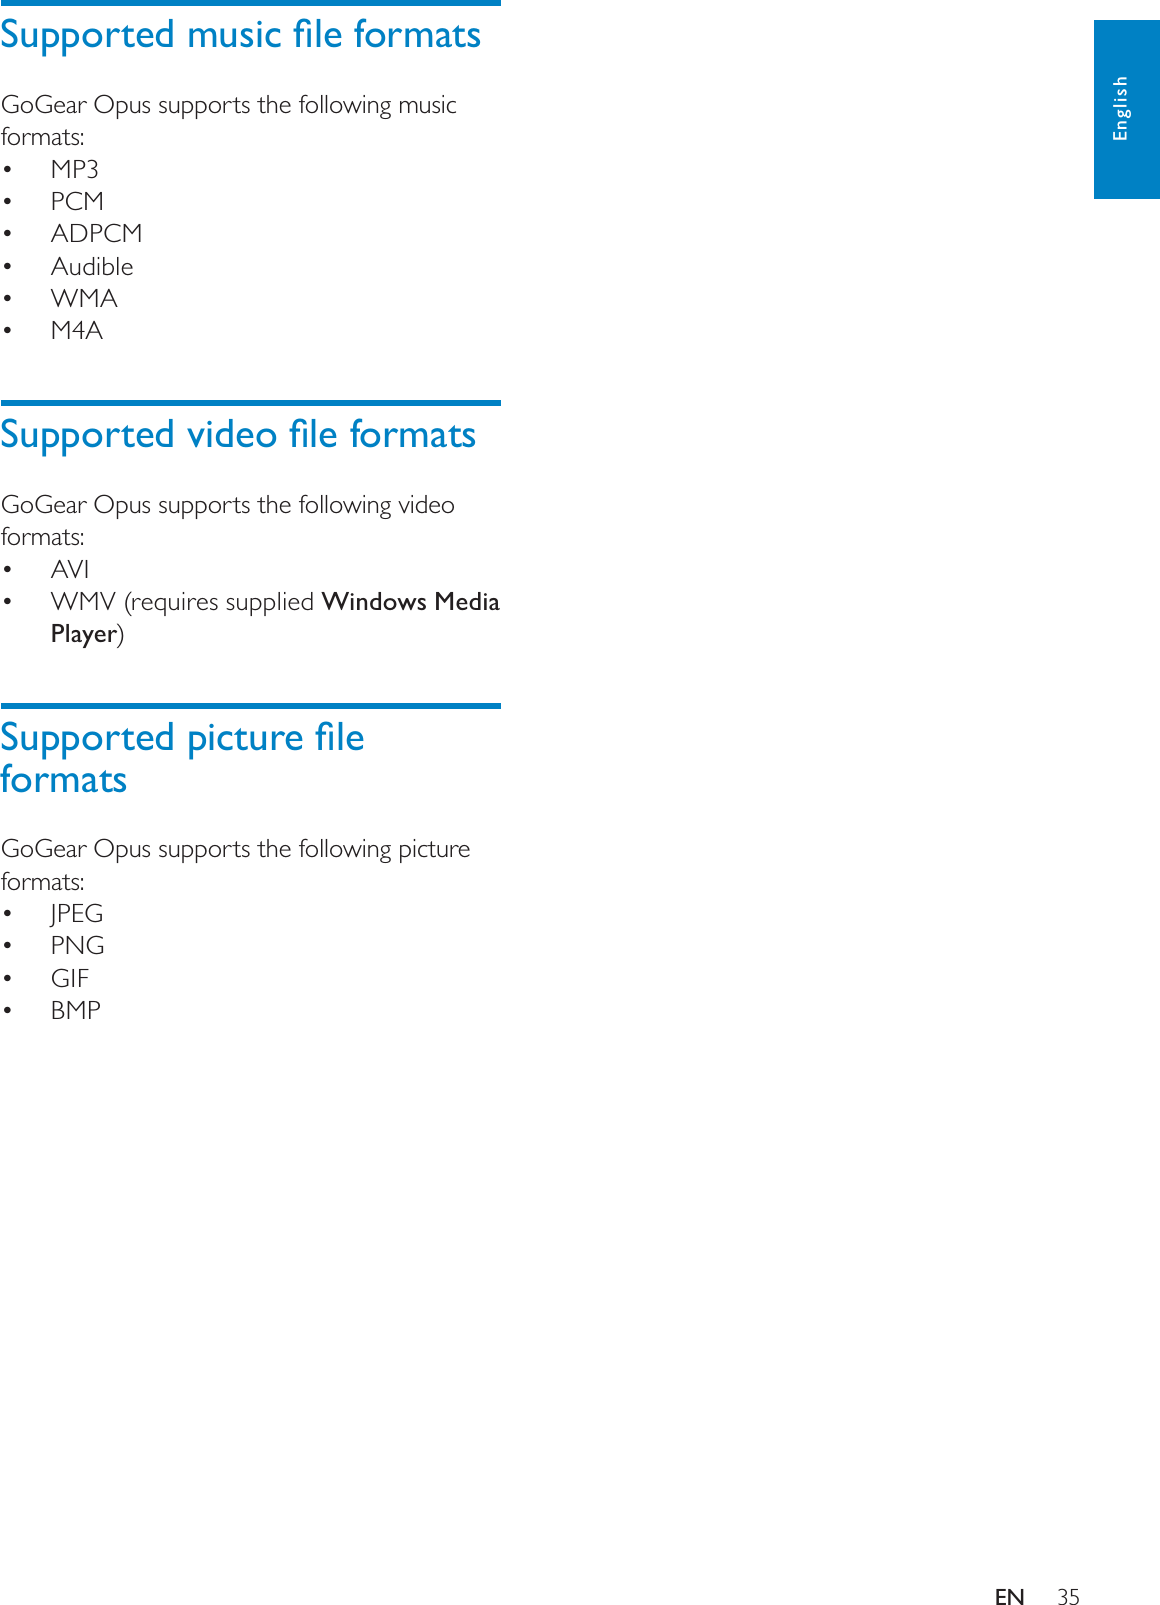 356XSSRUWHGPXVLFÀOHIRUPDWVGoGear Opus supports the following music formats:MP3PCMADPCMAudibleWMAM4A6XSSRUWHGYLGHRÀOHIRUPDWVGoGear Opus supports the following video formats:AVIWMV (requires supplied  Windows Media Player)6XSSRUWHGSLFWXUHÀOHformatsGoGear Opus supports the following picture formats:JPEGPNGGIFBMPEnglishEN